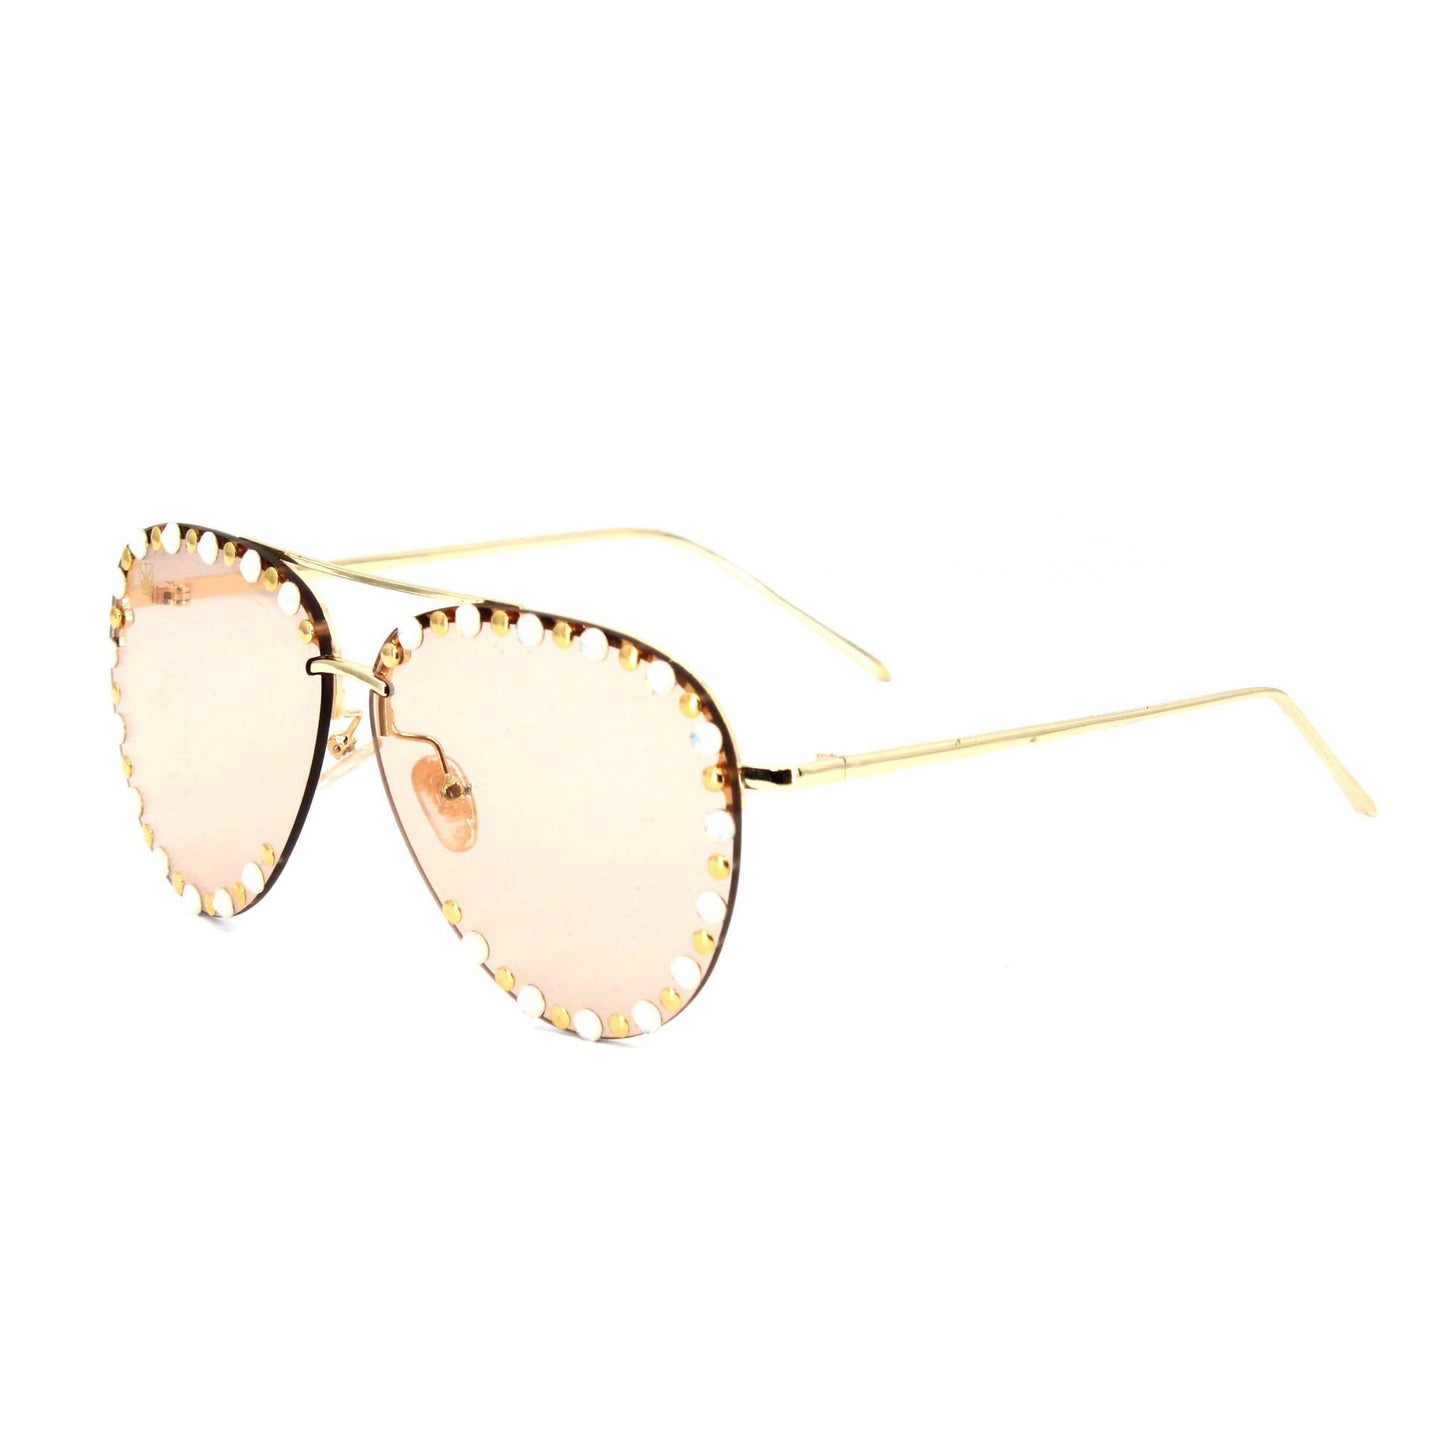 Summerz Fashion Gold Opulence sunglasses.